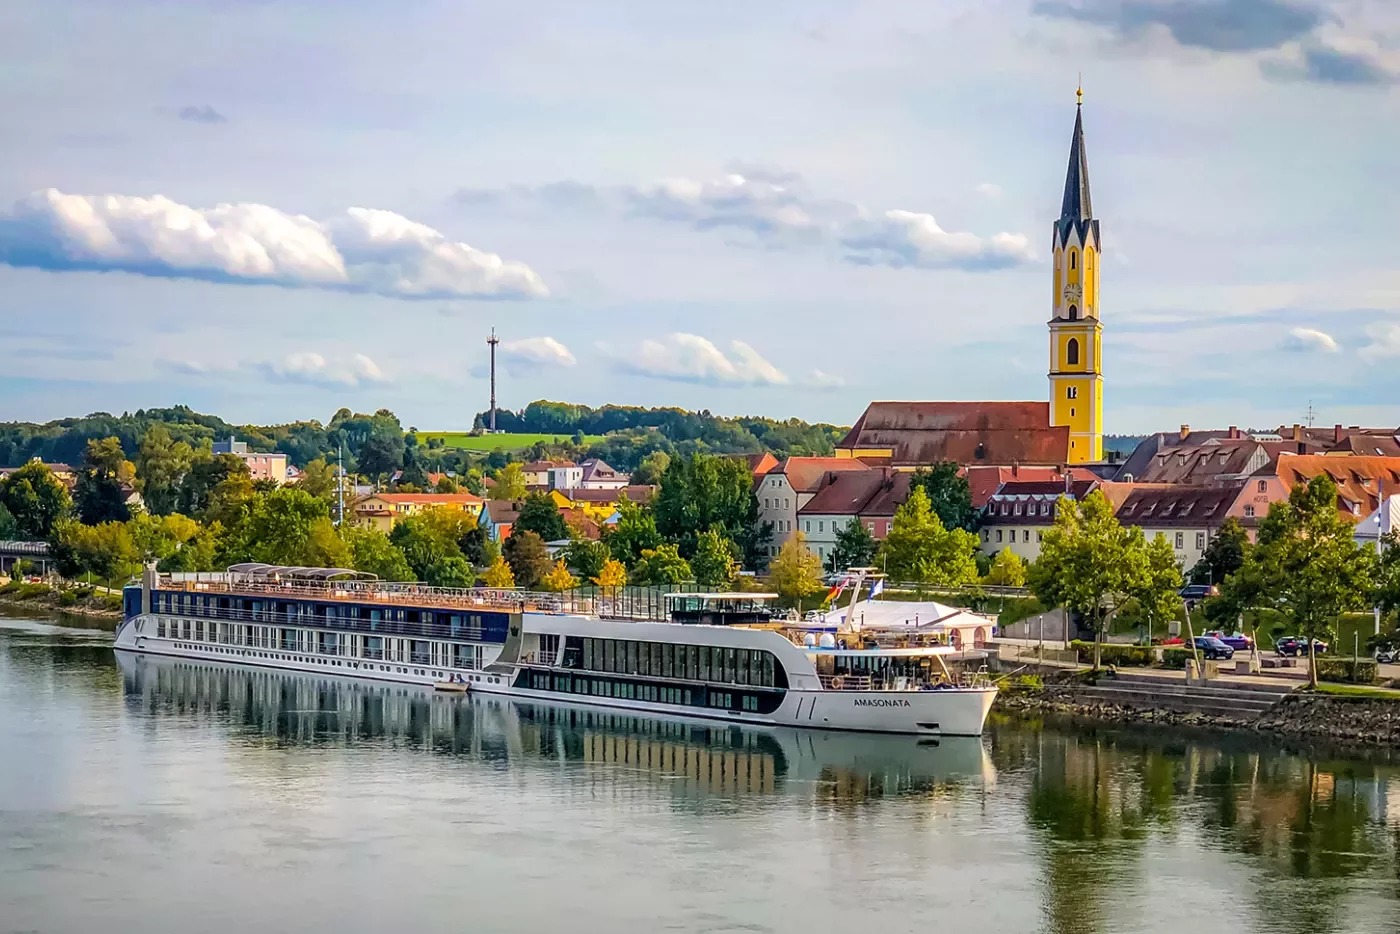 View of the Ama Sonata ship on the Danube River.